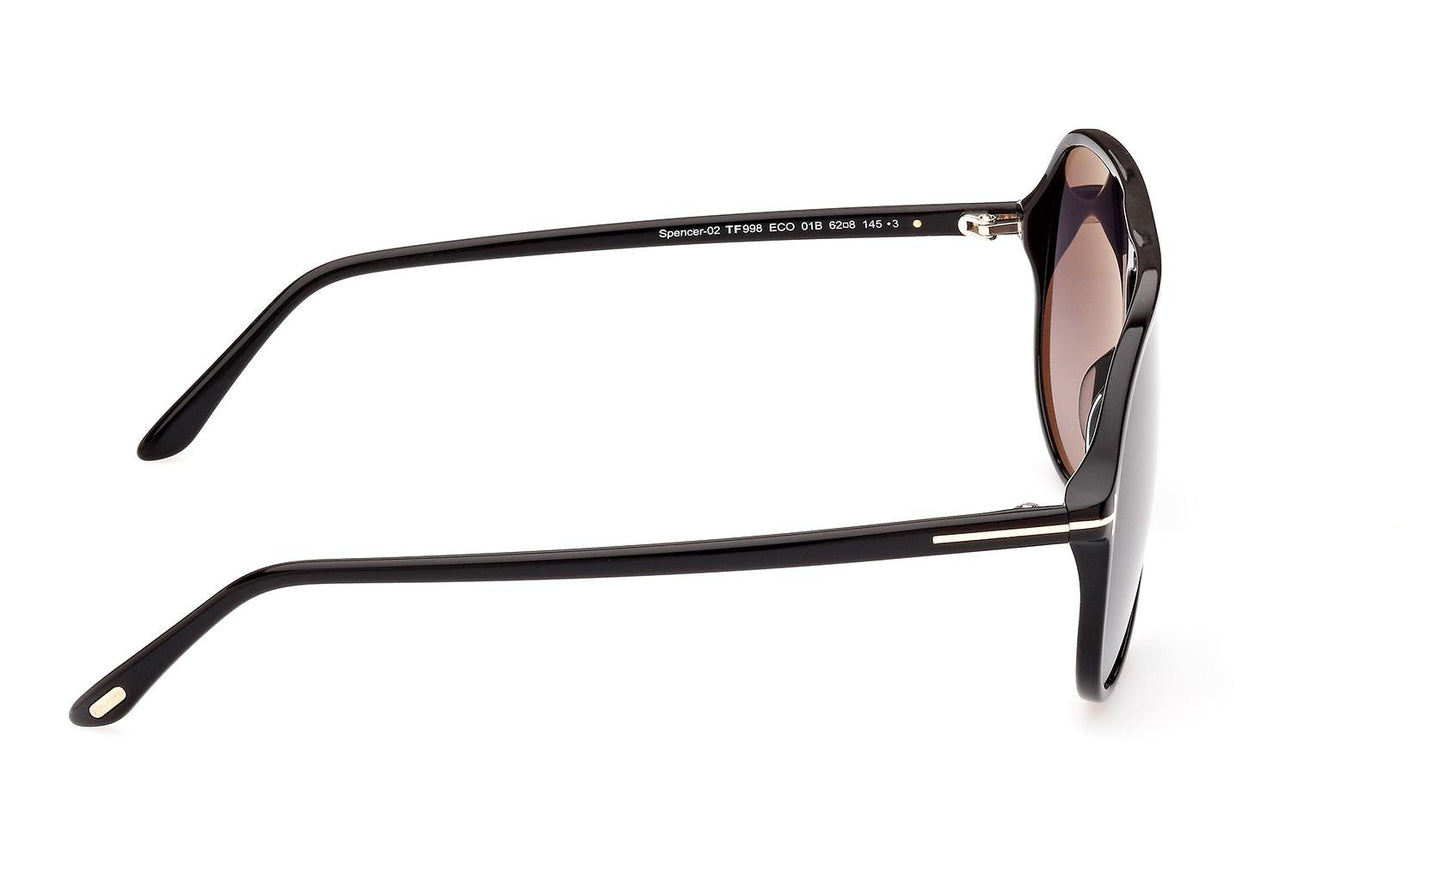 Tom Ford Sunglasses SPENCER/02 01B